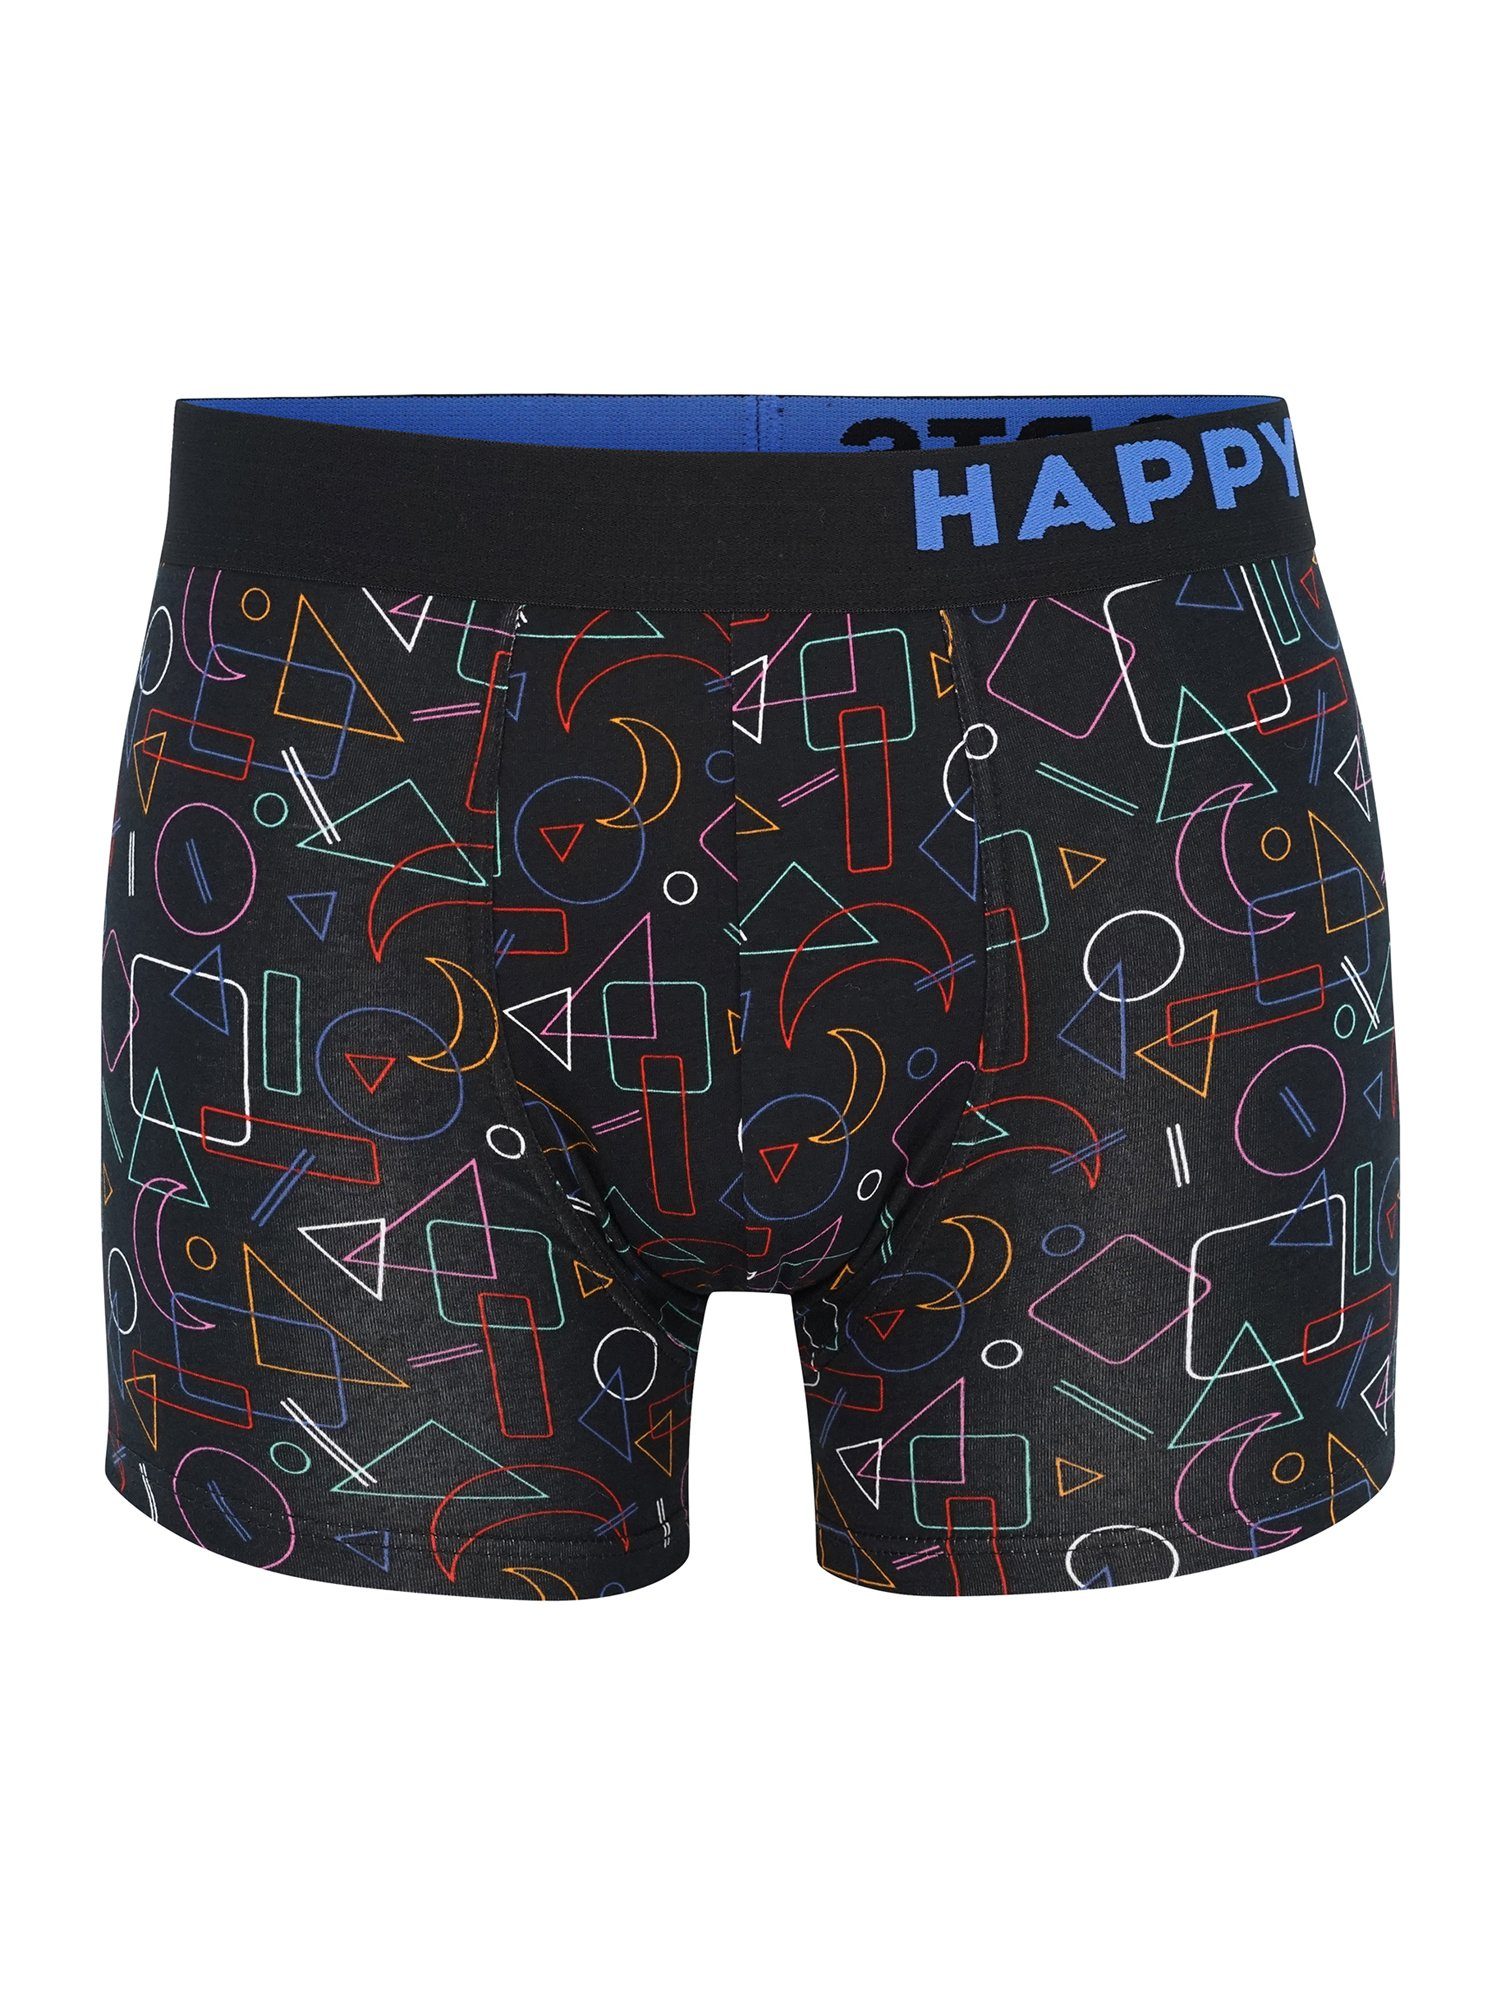 SHORTS HAPPY Pants Trunks Retro Geometry Motivprint